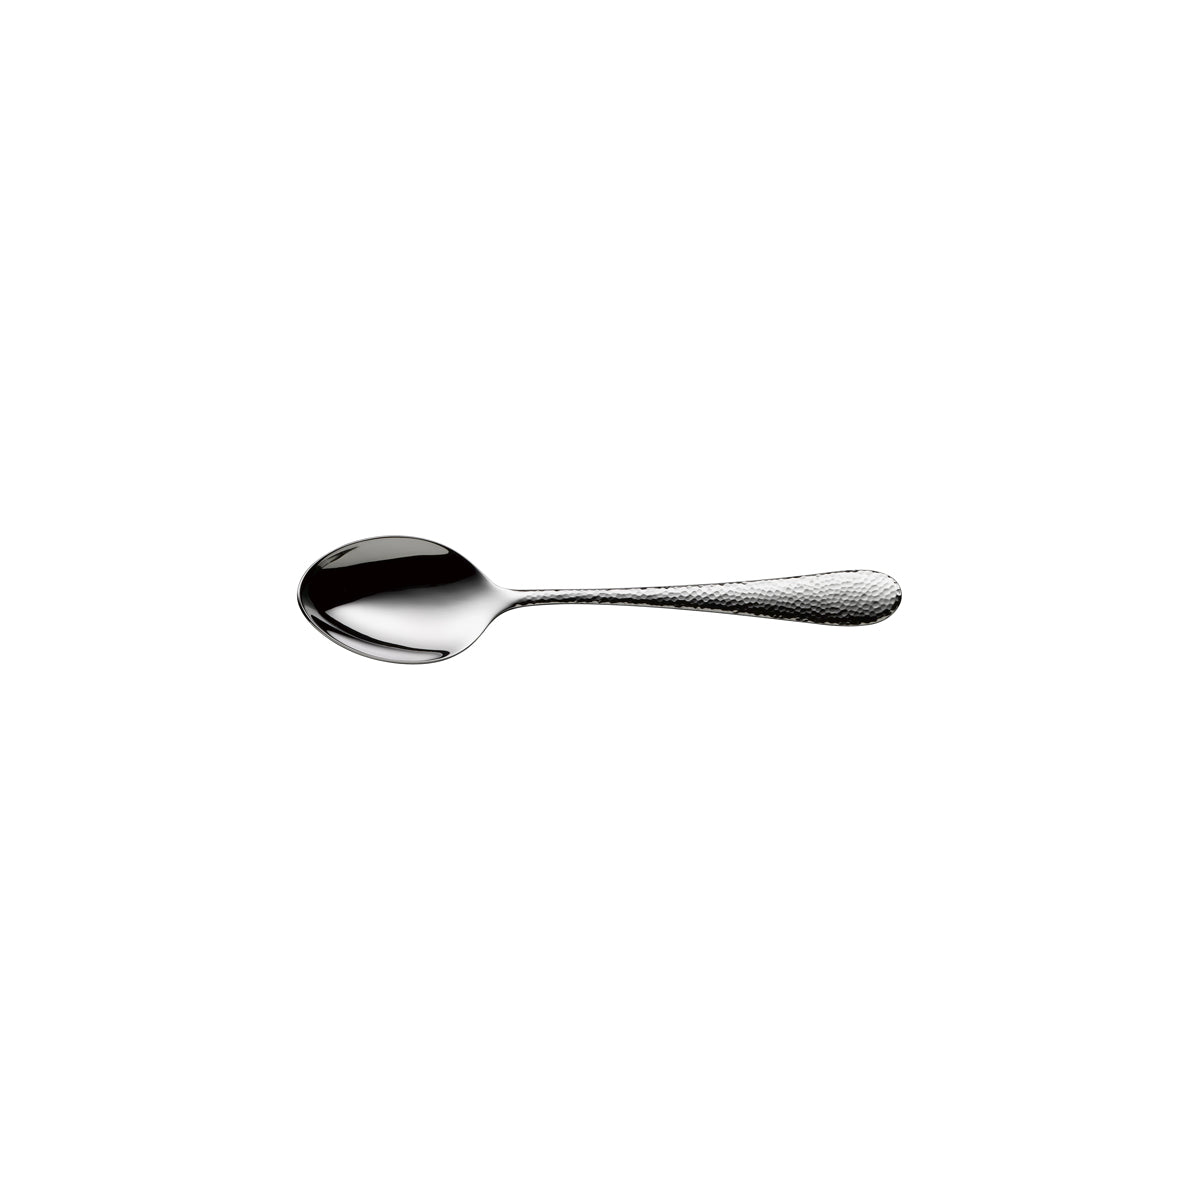 54.5004.6040 WMF Sitello Dessert Spoon Stainless Steel Tomkin Australia Hospitality Supplies